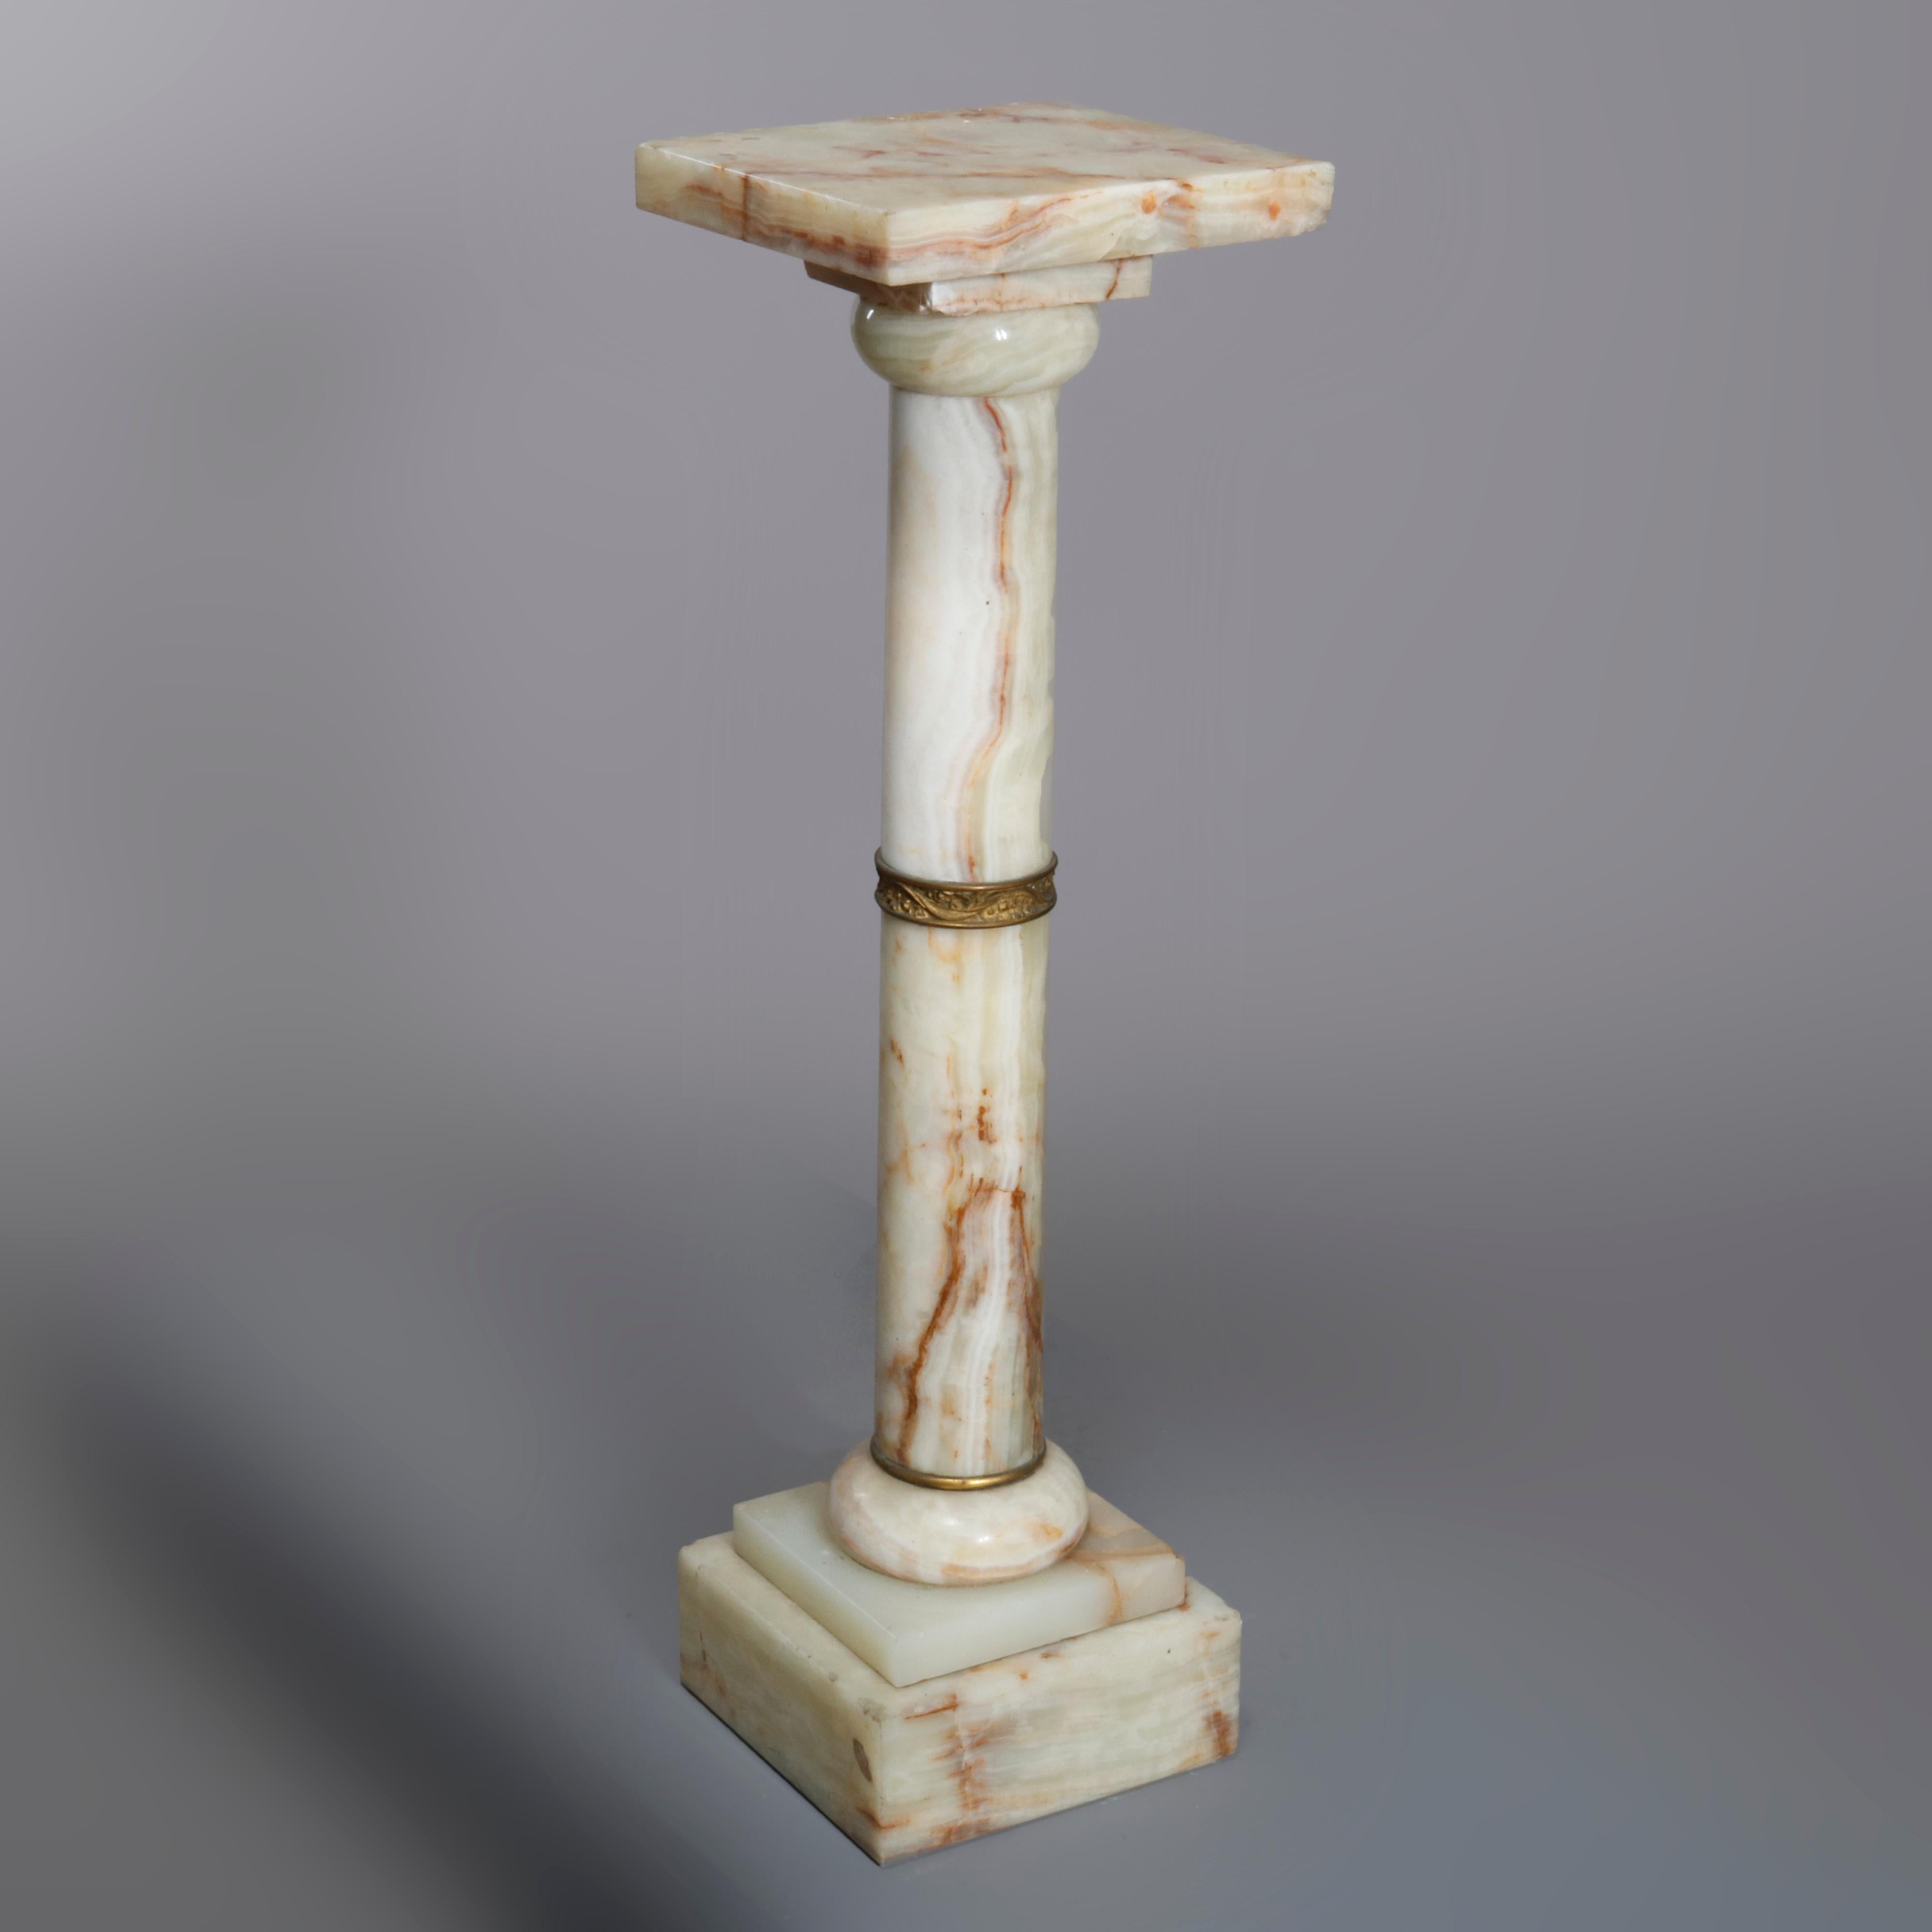 European Antique Neoclassical Onyx and Ormolu Sculpture Pedestal, Circa 1890